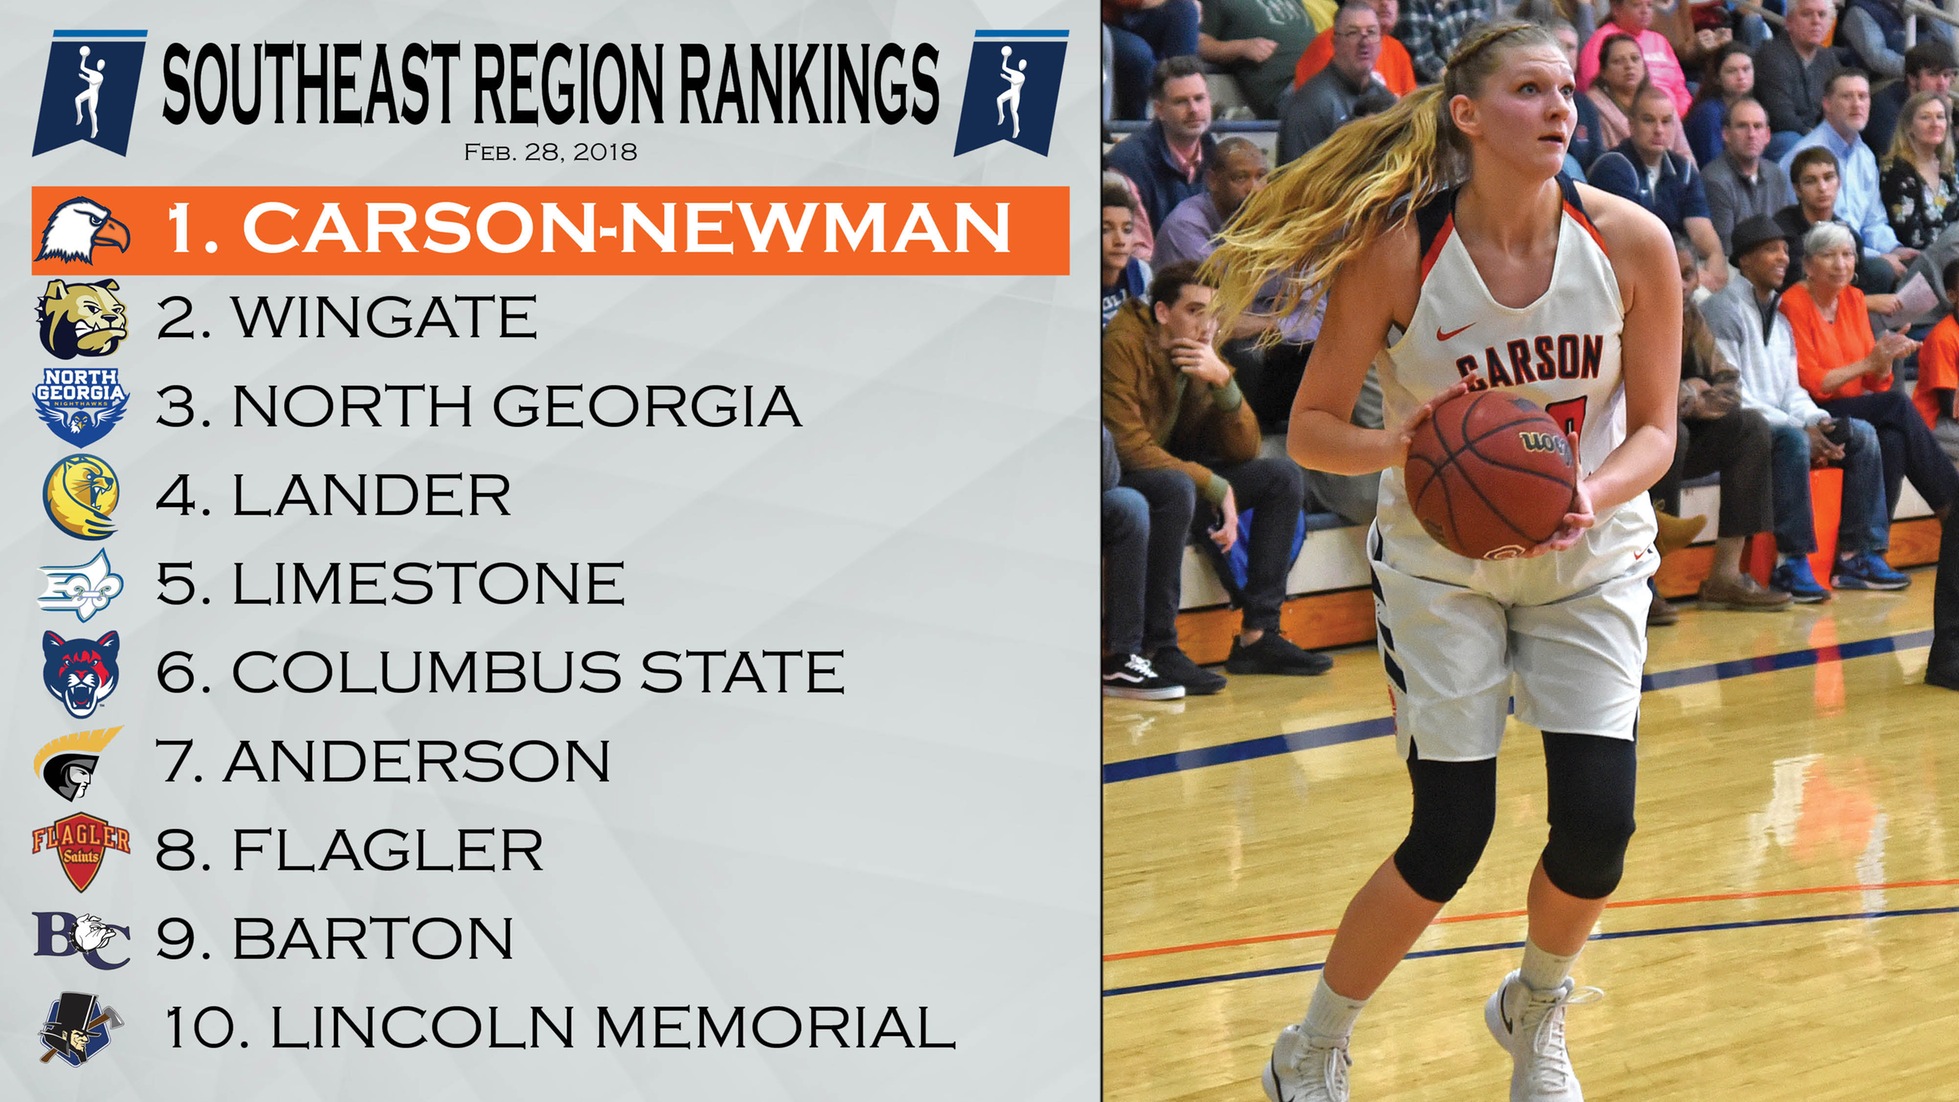 Last installment of NCAA Region Rankings shows C-N on top